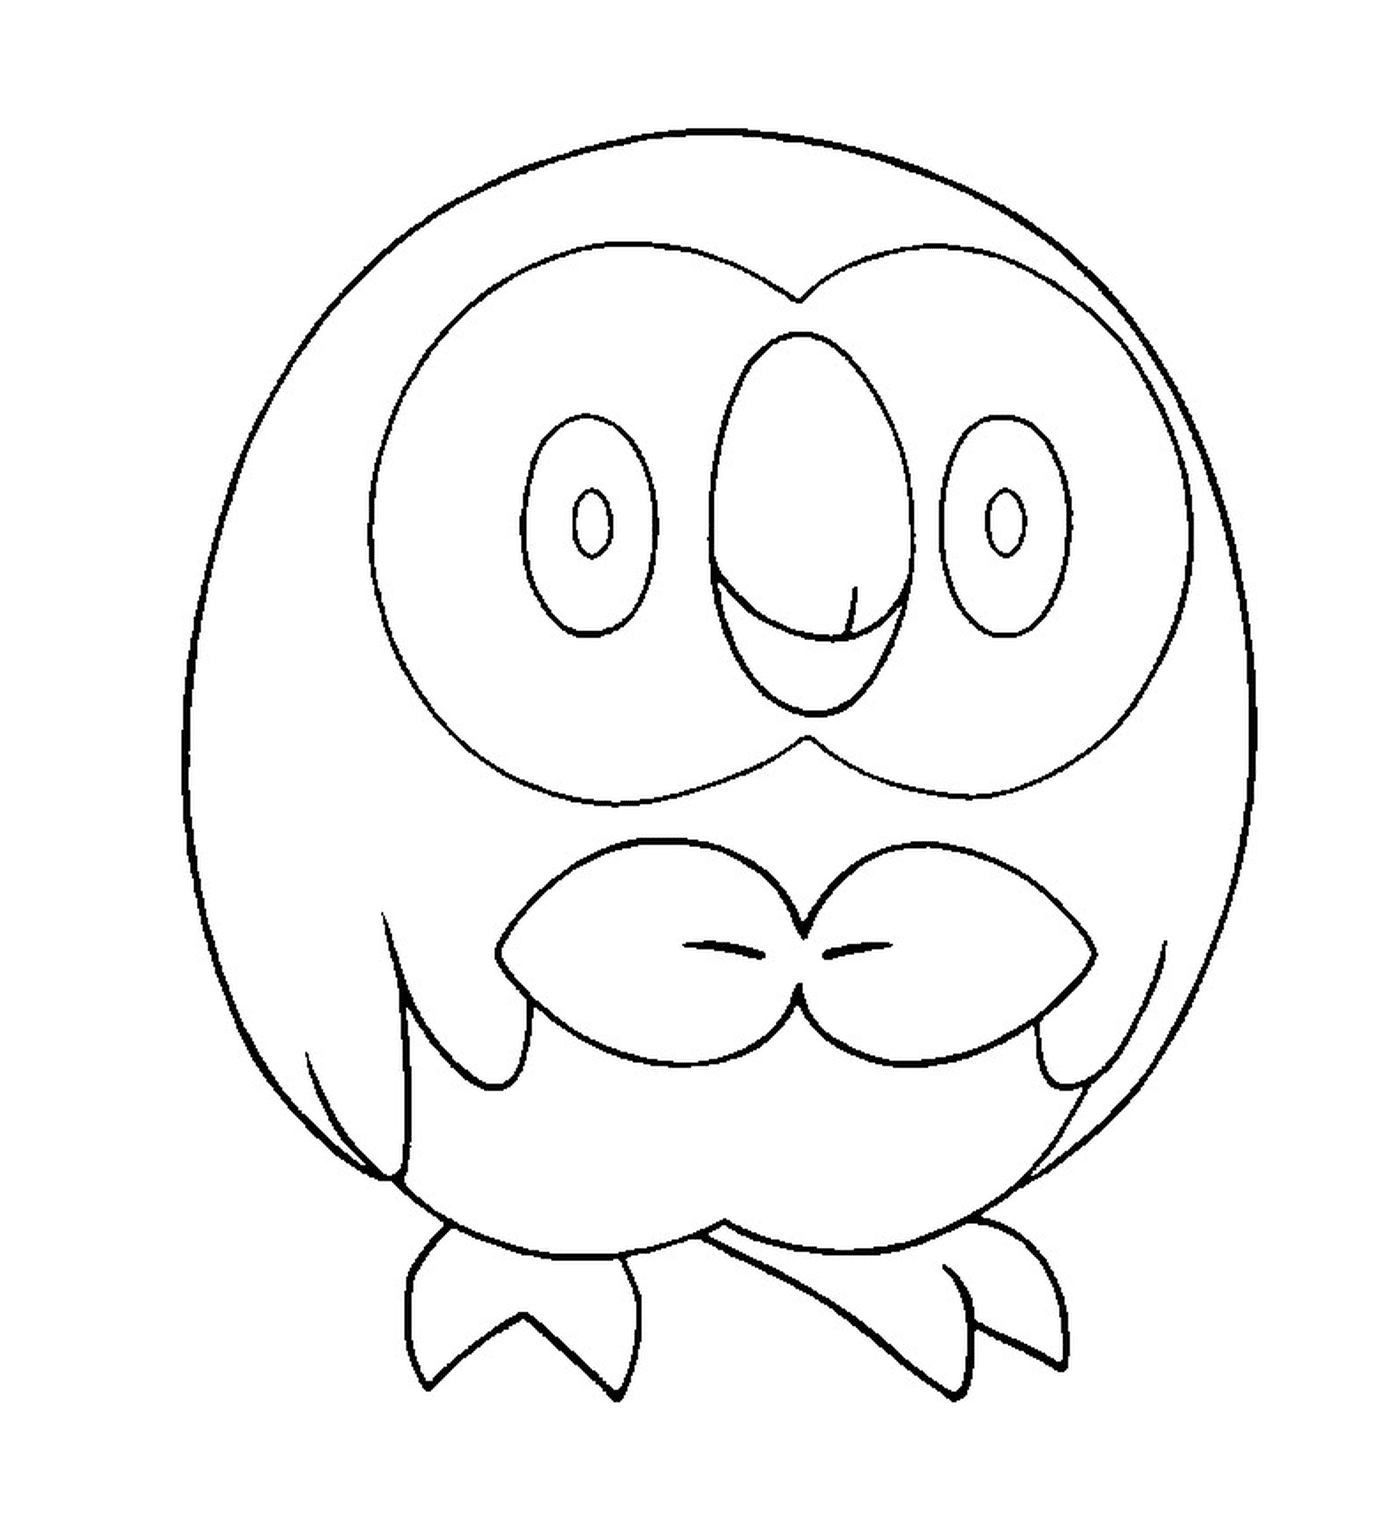  Brindibou, an owl with a mustache 